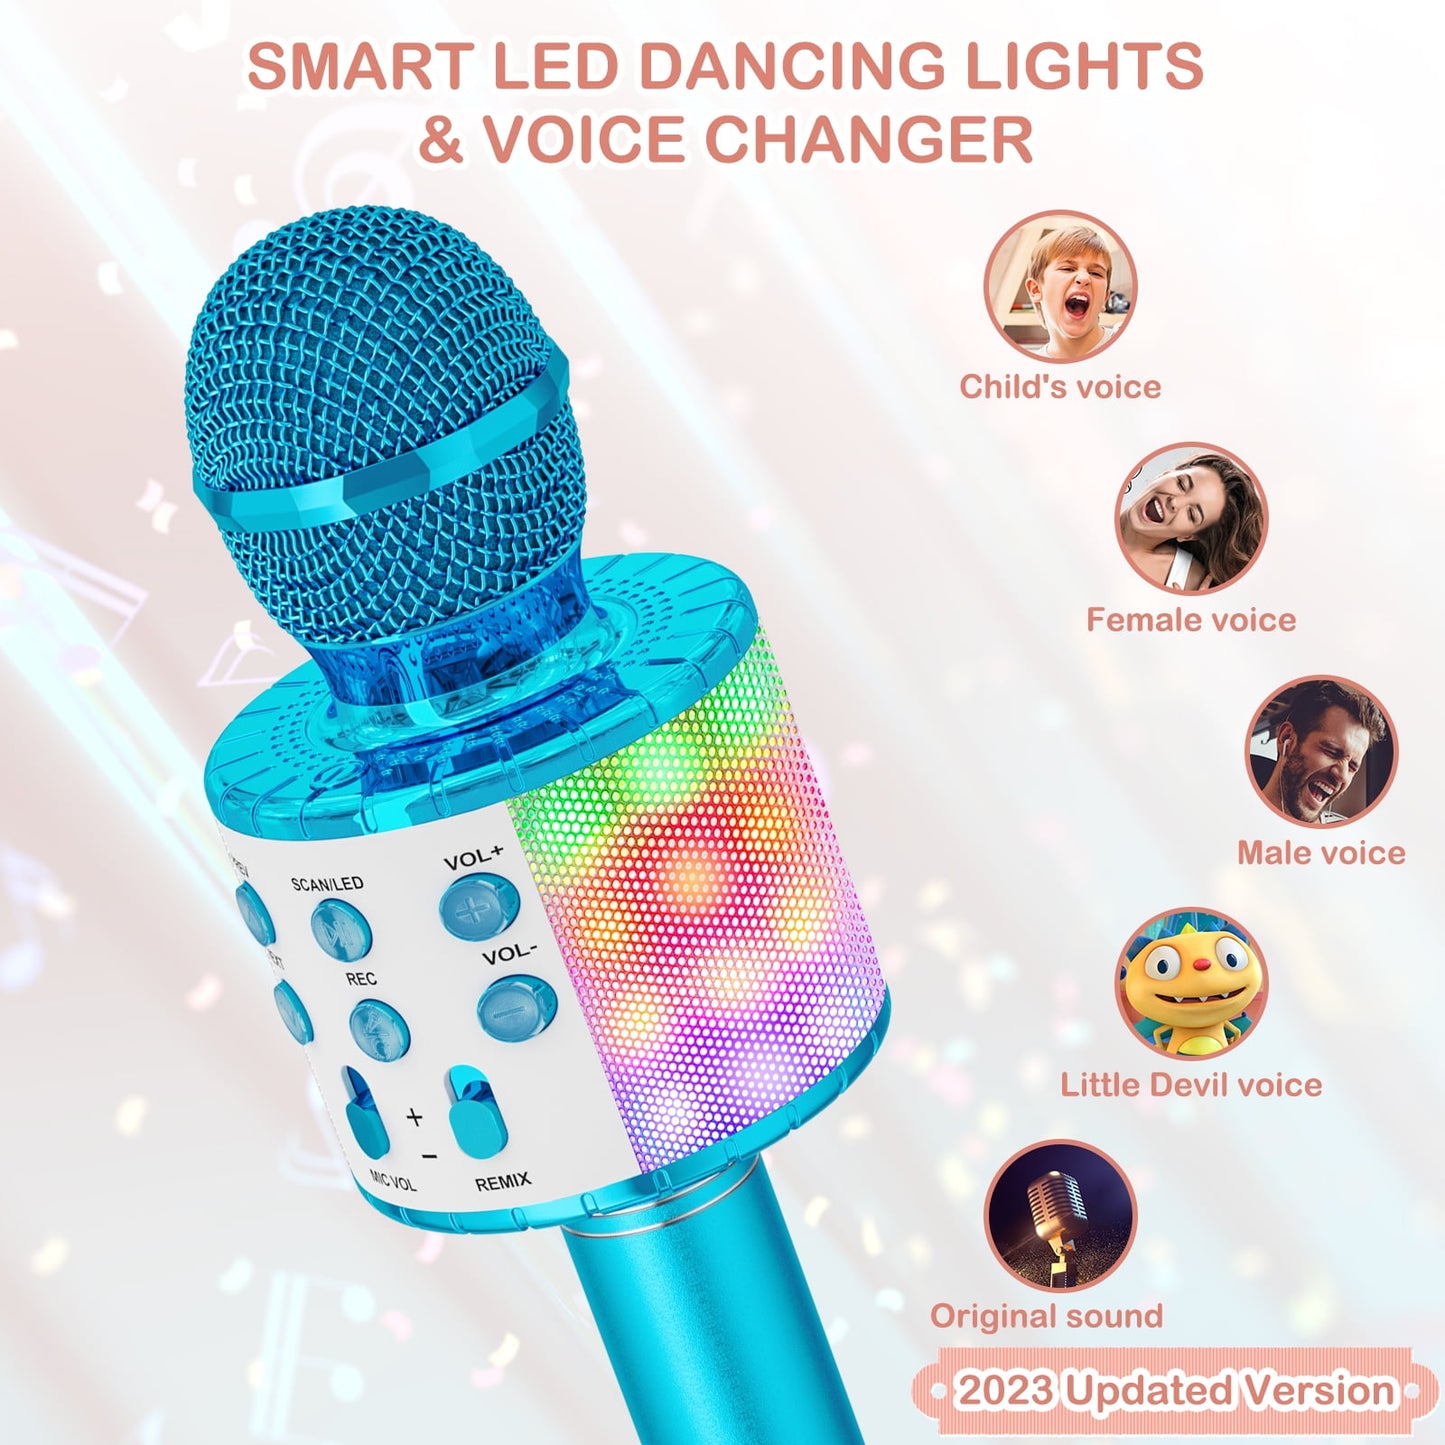 BONAOK Karaoke Microphone for Kids, Portable Wireless Bluetooth Microphone with LED Lights, Karaoke Mic Speaker Machine for Girls Boys Gifts(Rose Gold)